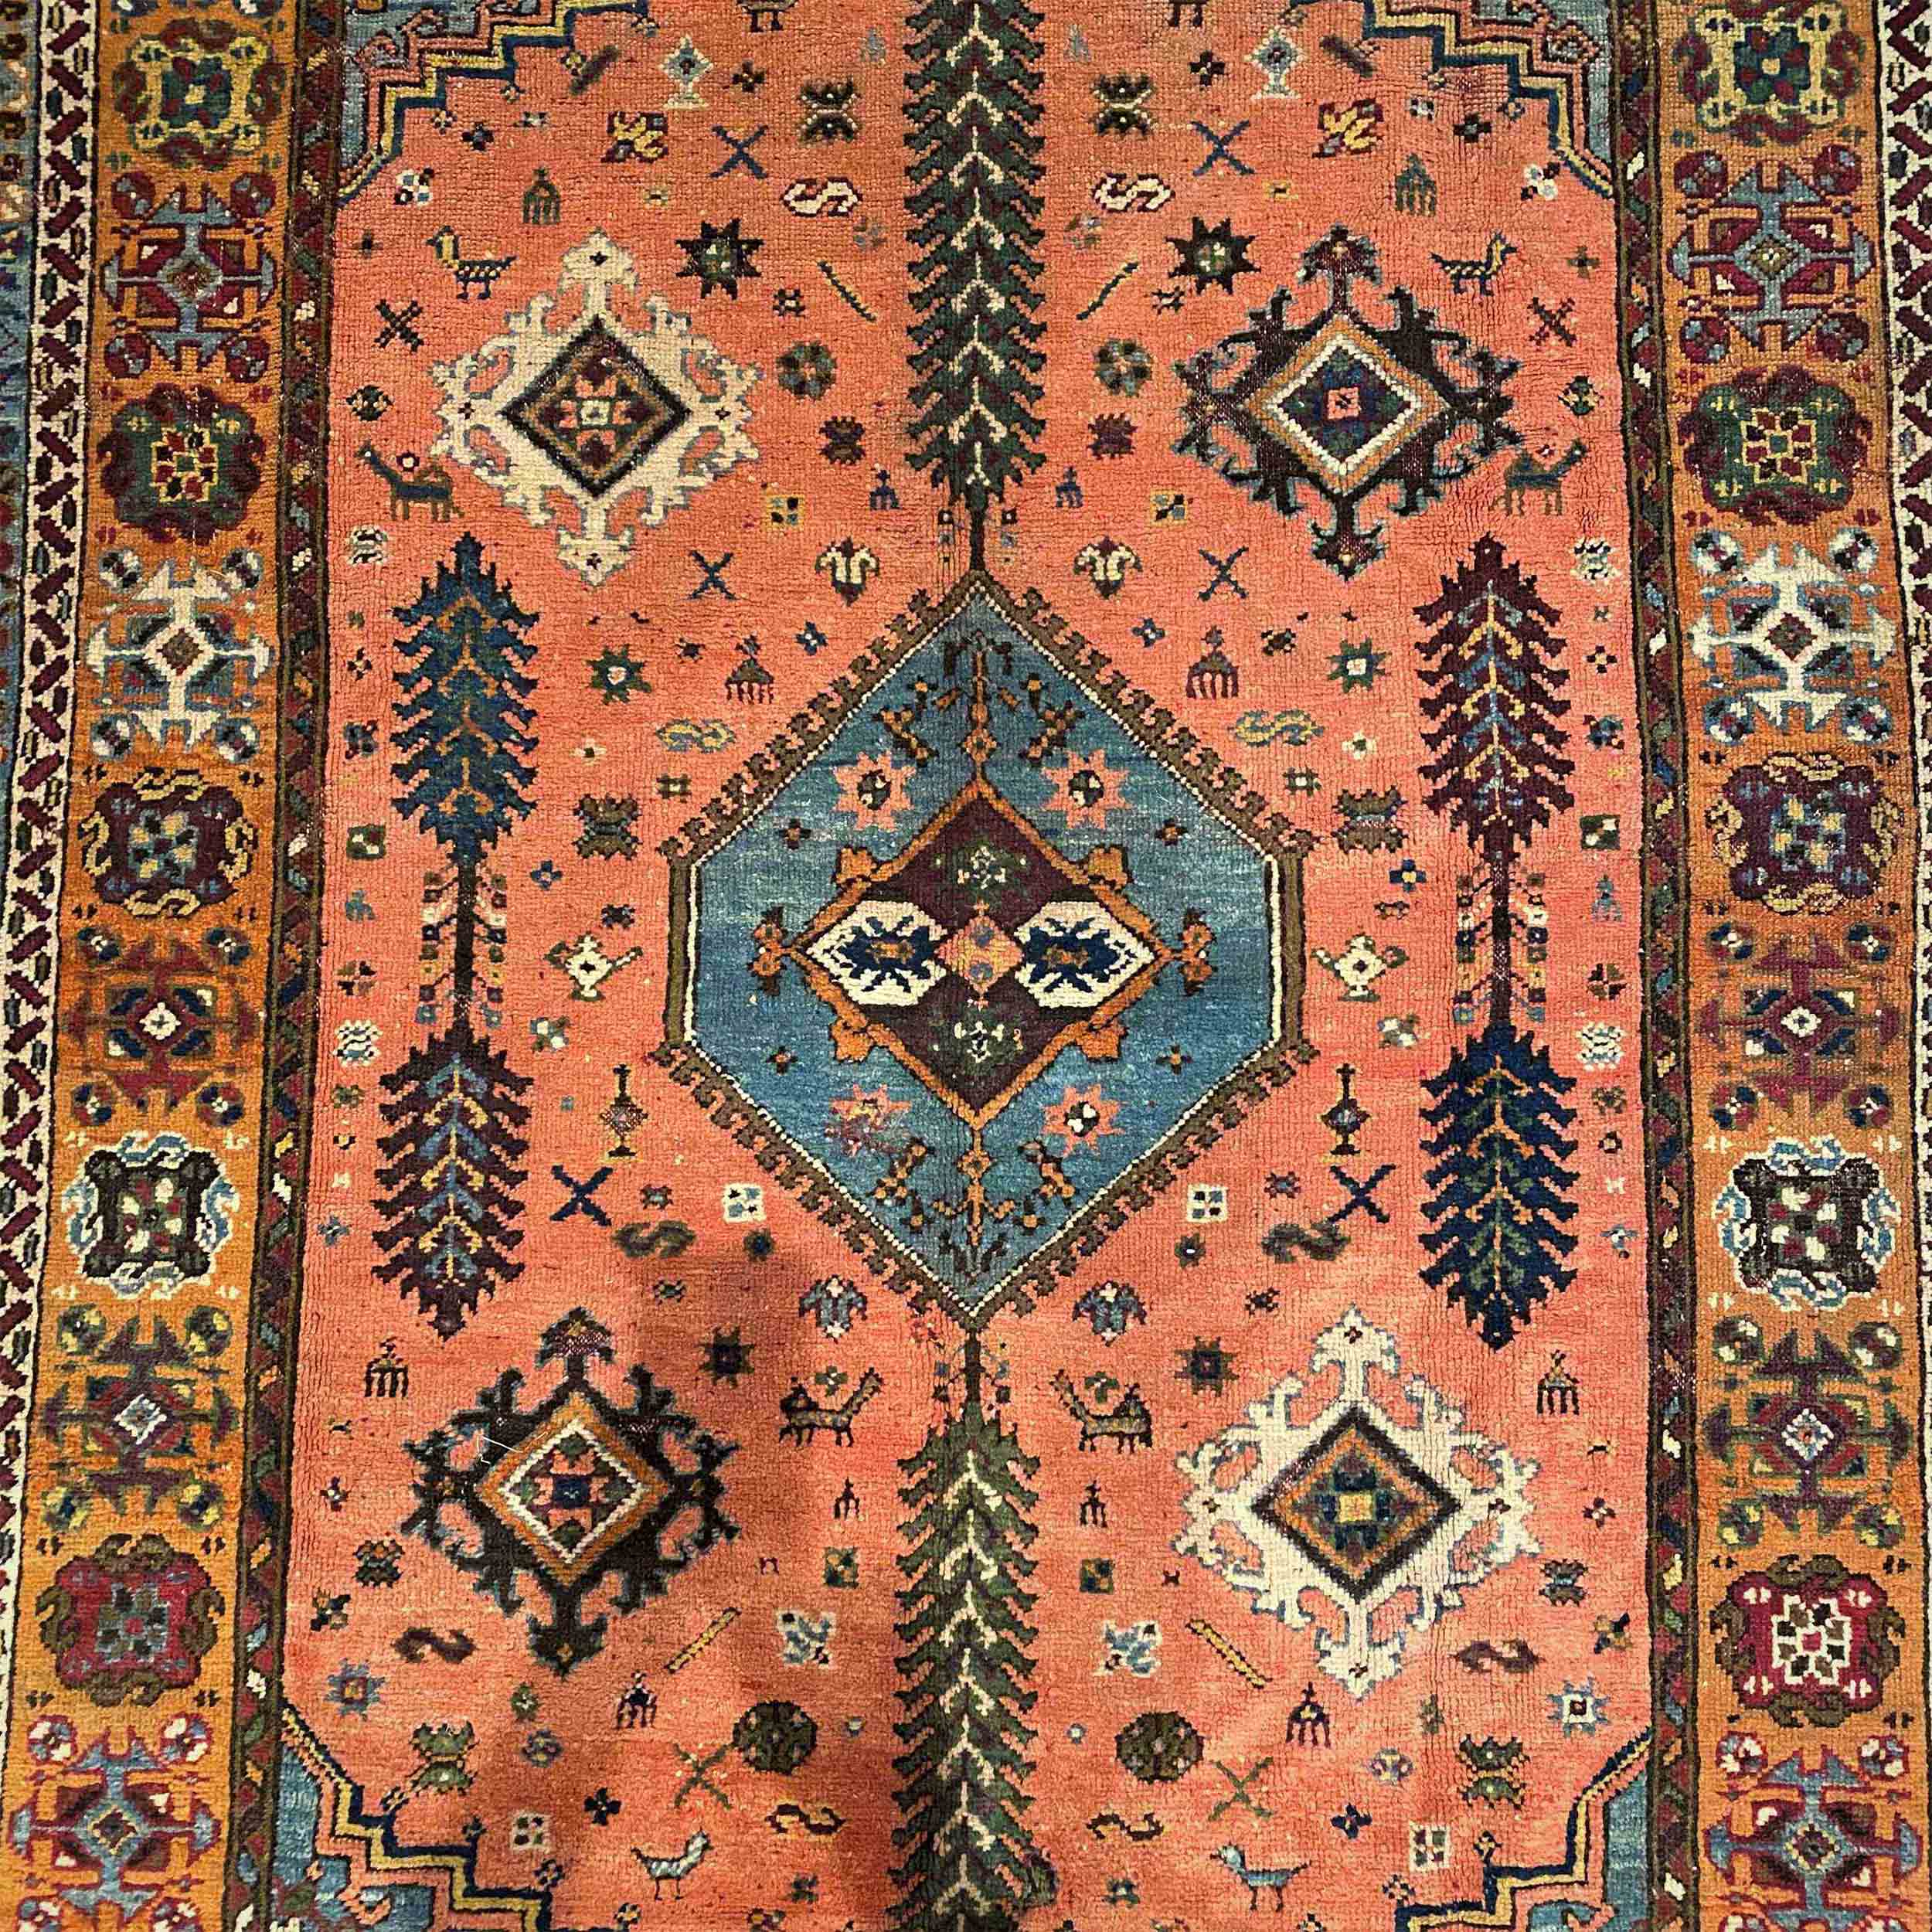 Rabat carpet collection